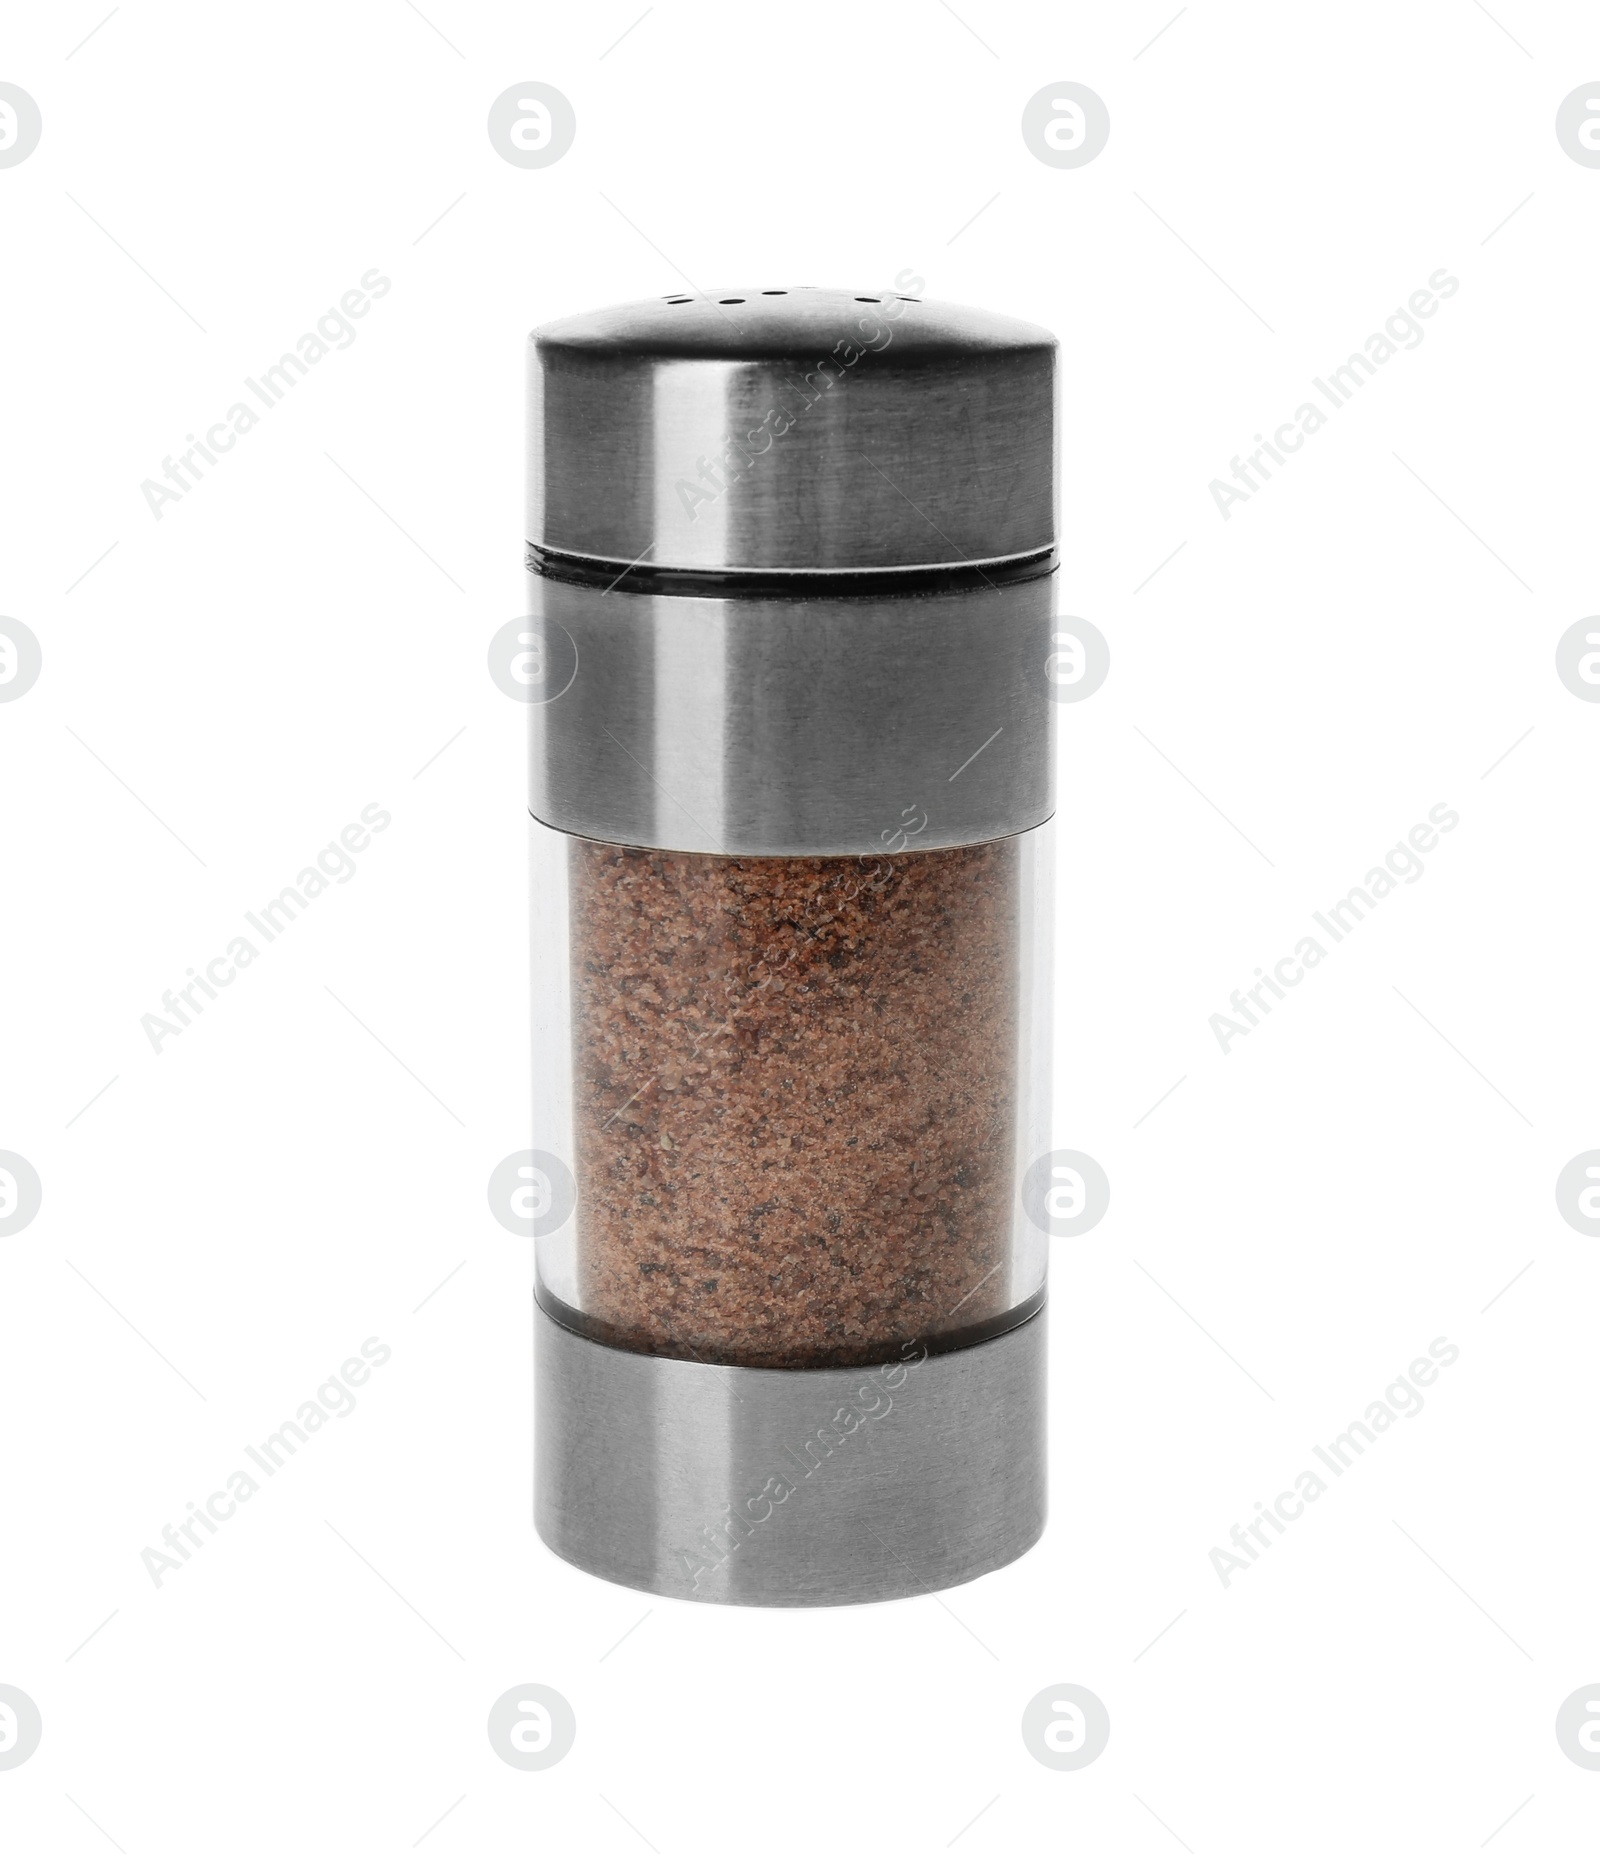 Photo of Ground black salt in shaker isolated on white